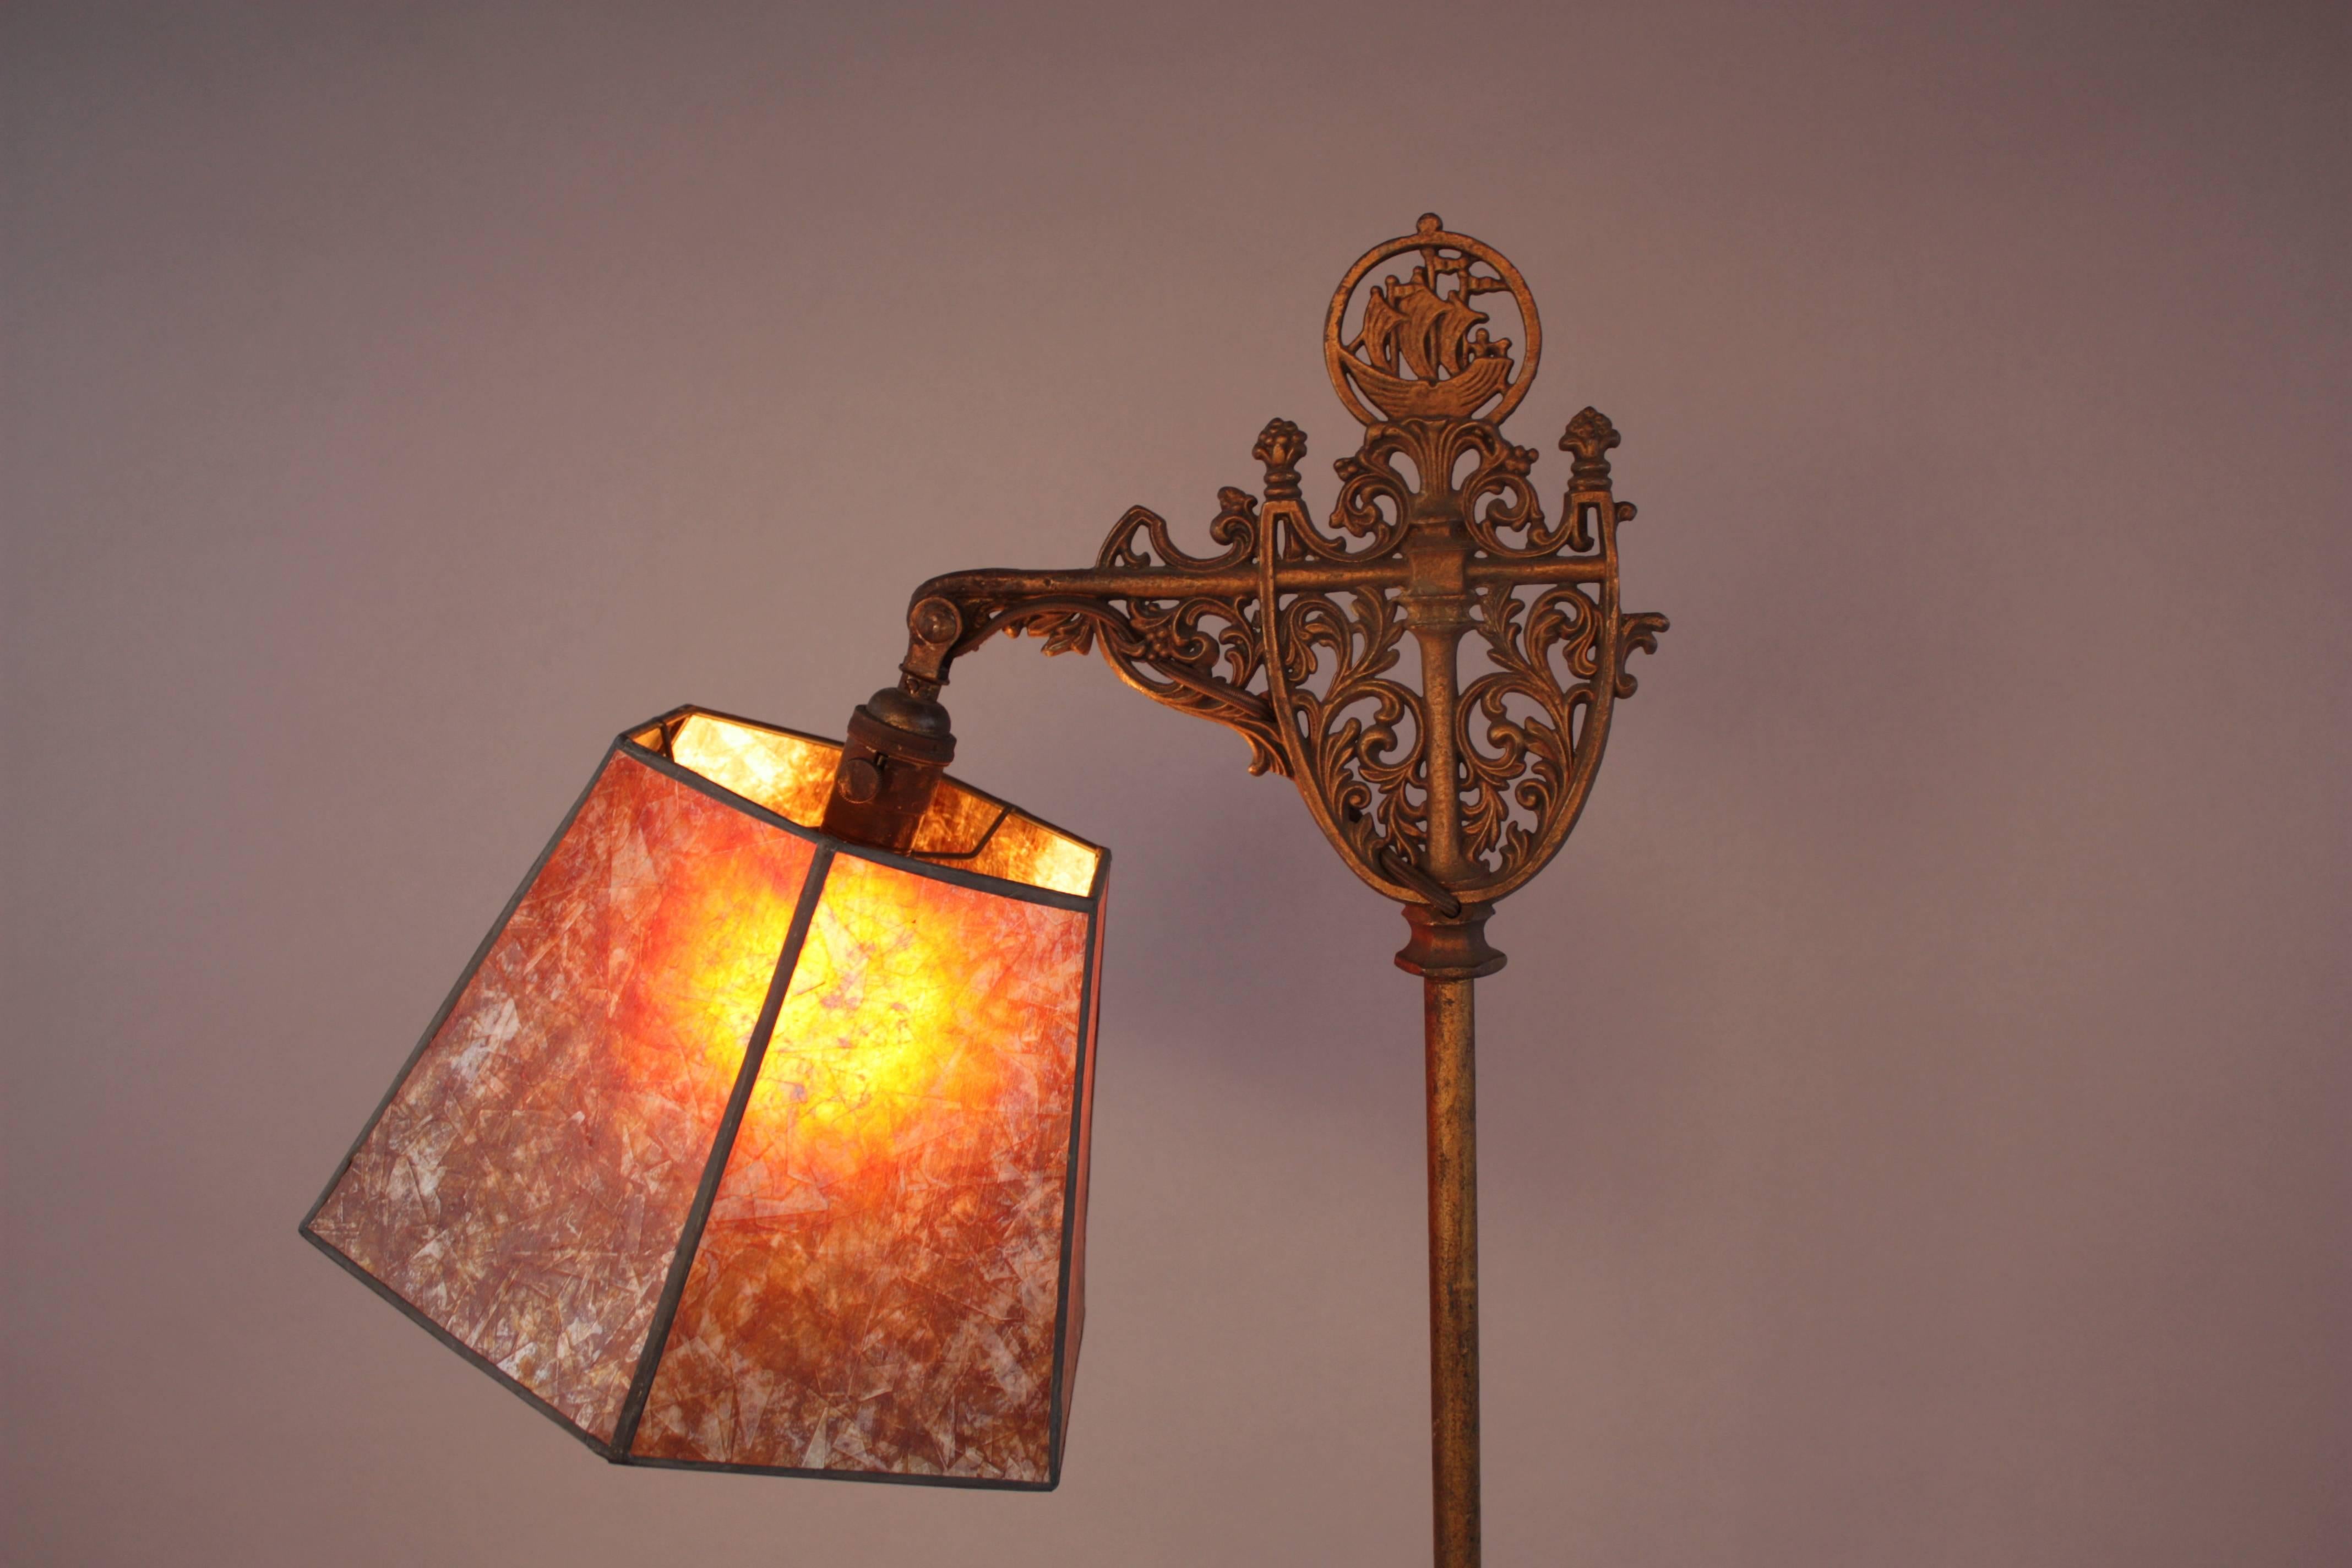 Circa 1920's bridge lamp with classic Spanish Revival ship motif.  Contemporary mica shade.